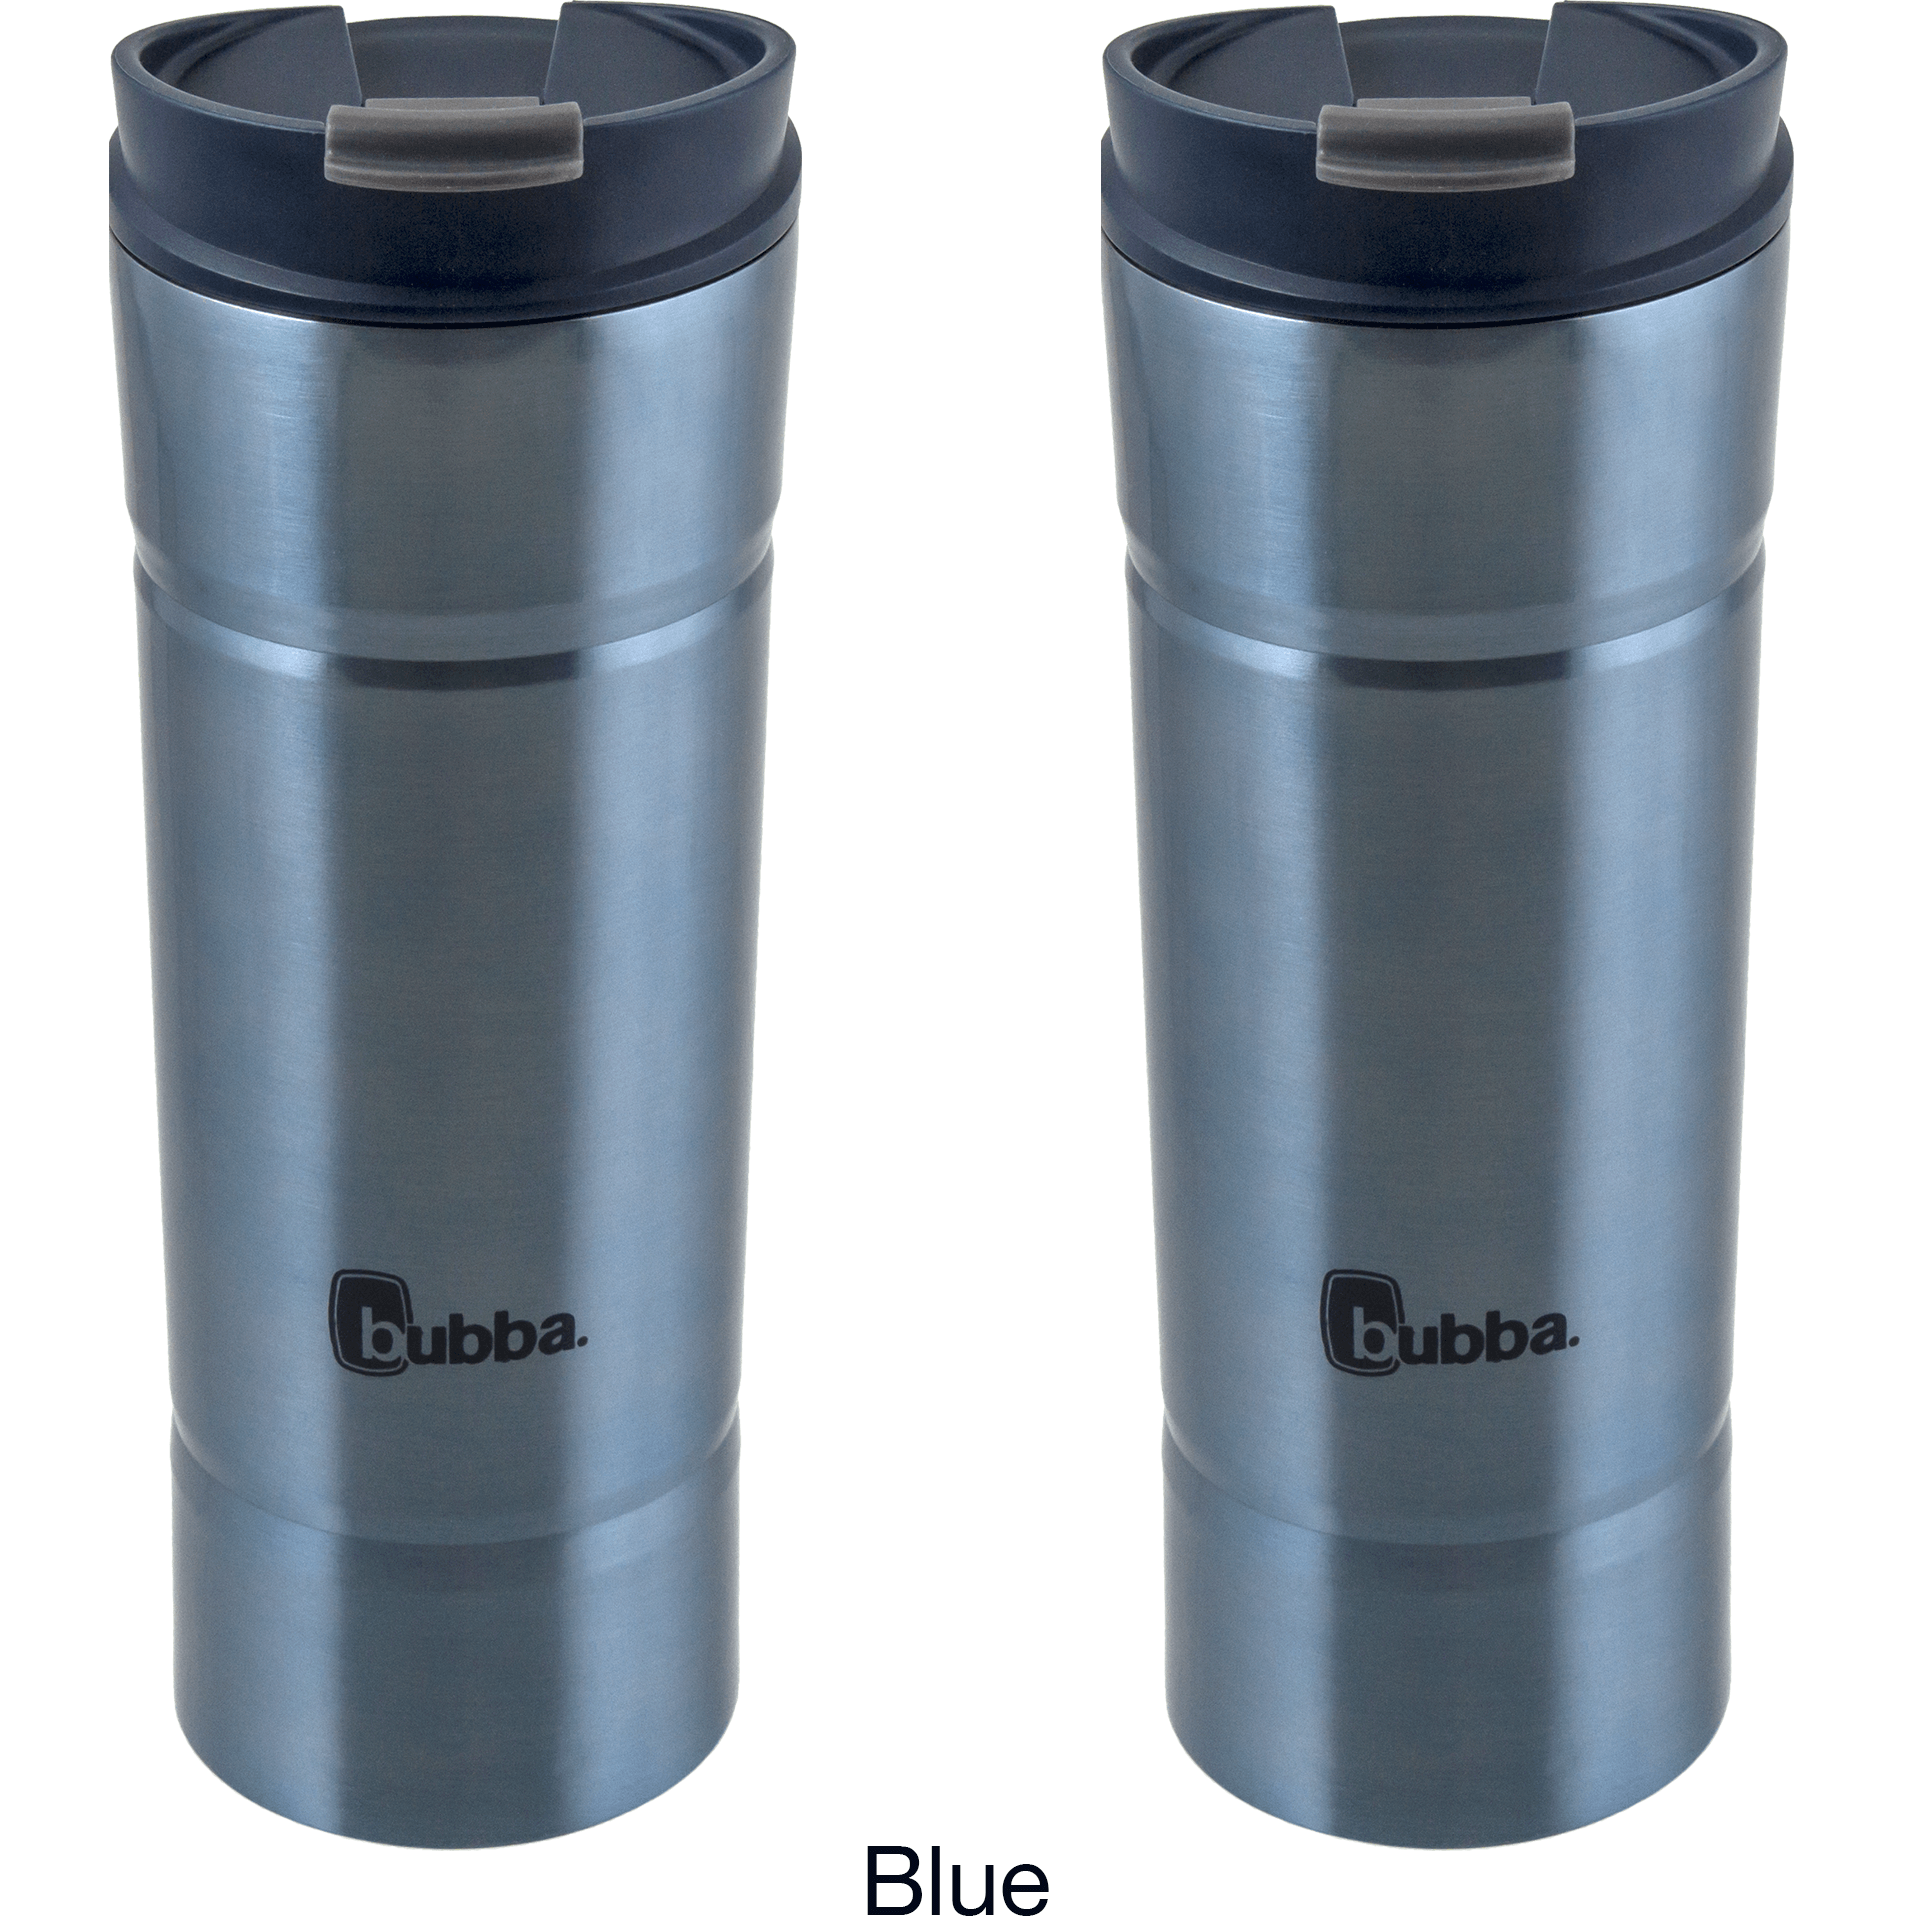 Bubba 18 oz. Hero Vacuum Insulated Stainless Steel Travel Mug - Blue